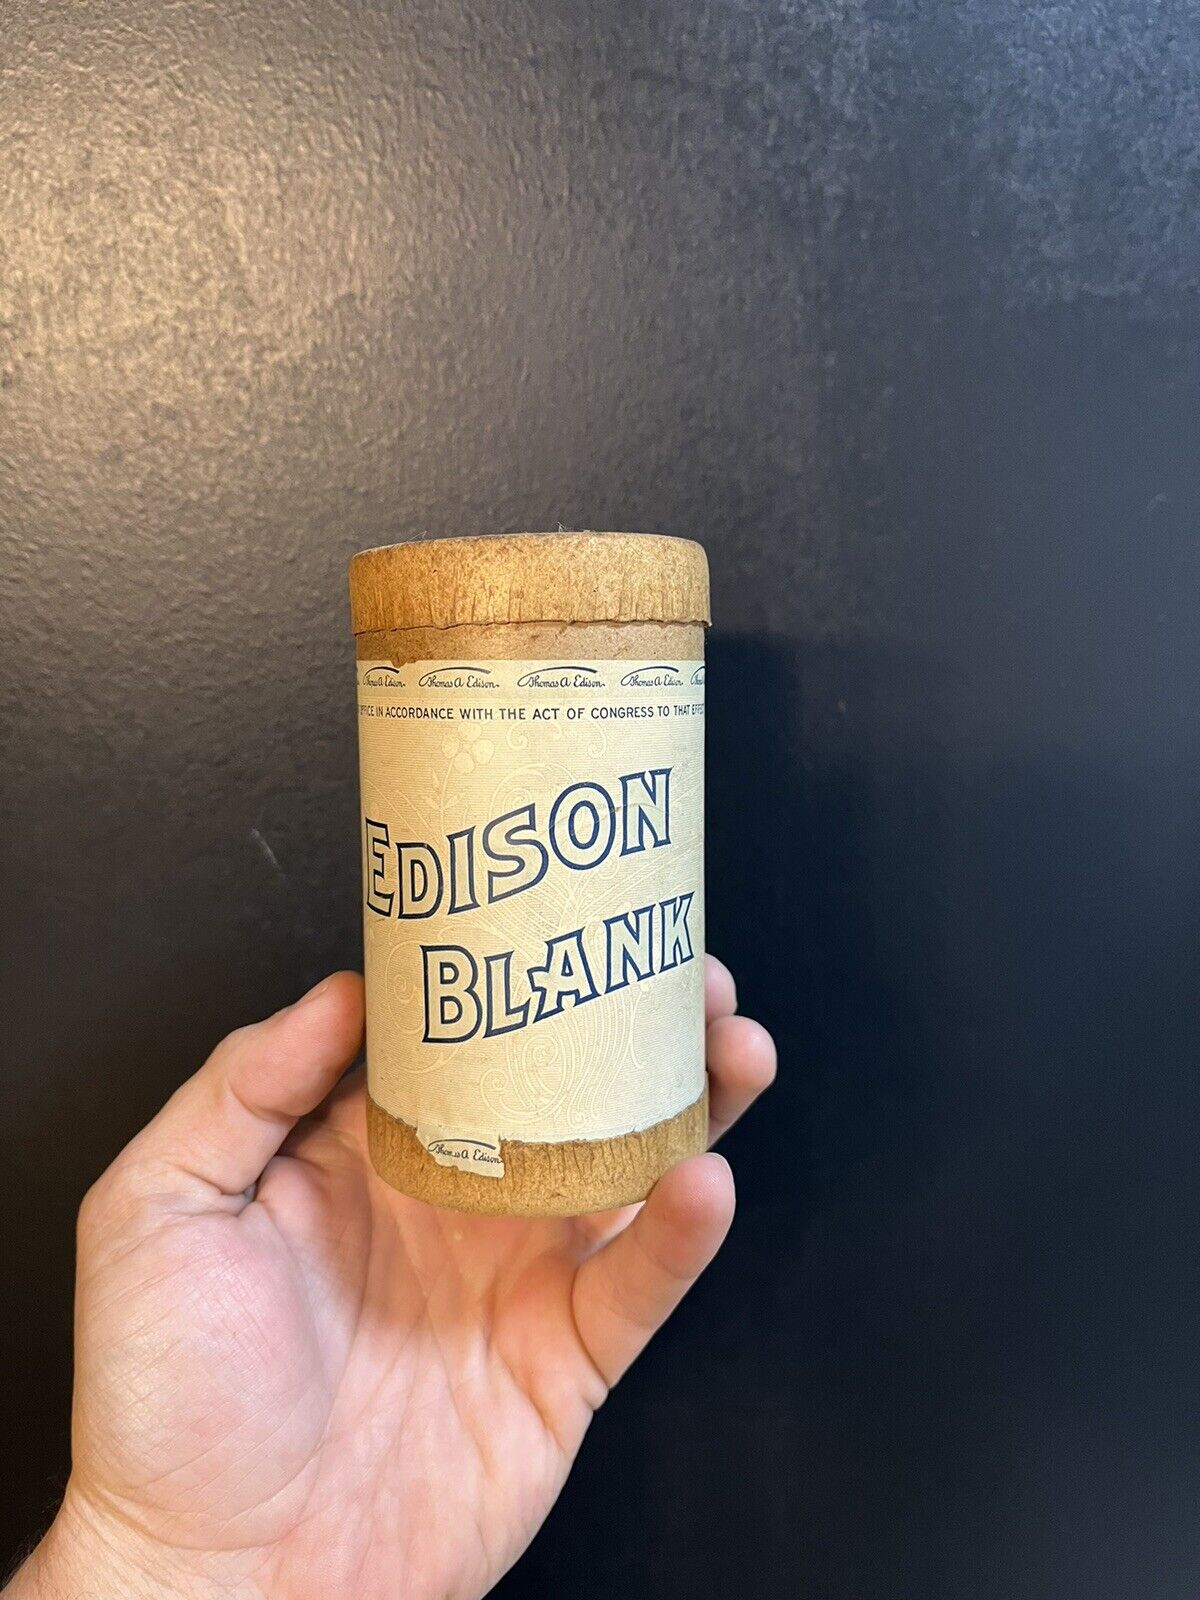 Edison Cylinder Blank Record Original Packaging Cotton Wrap